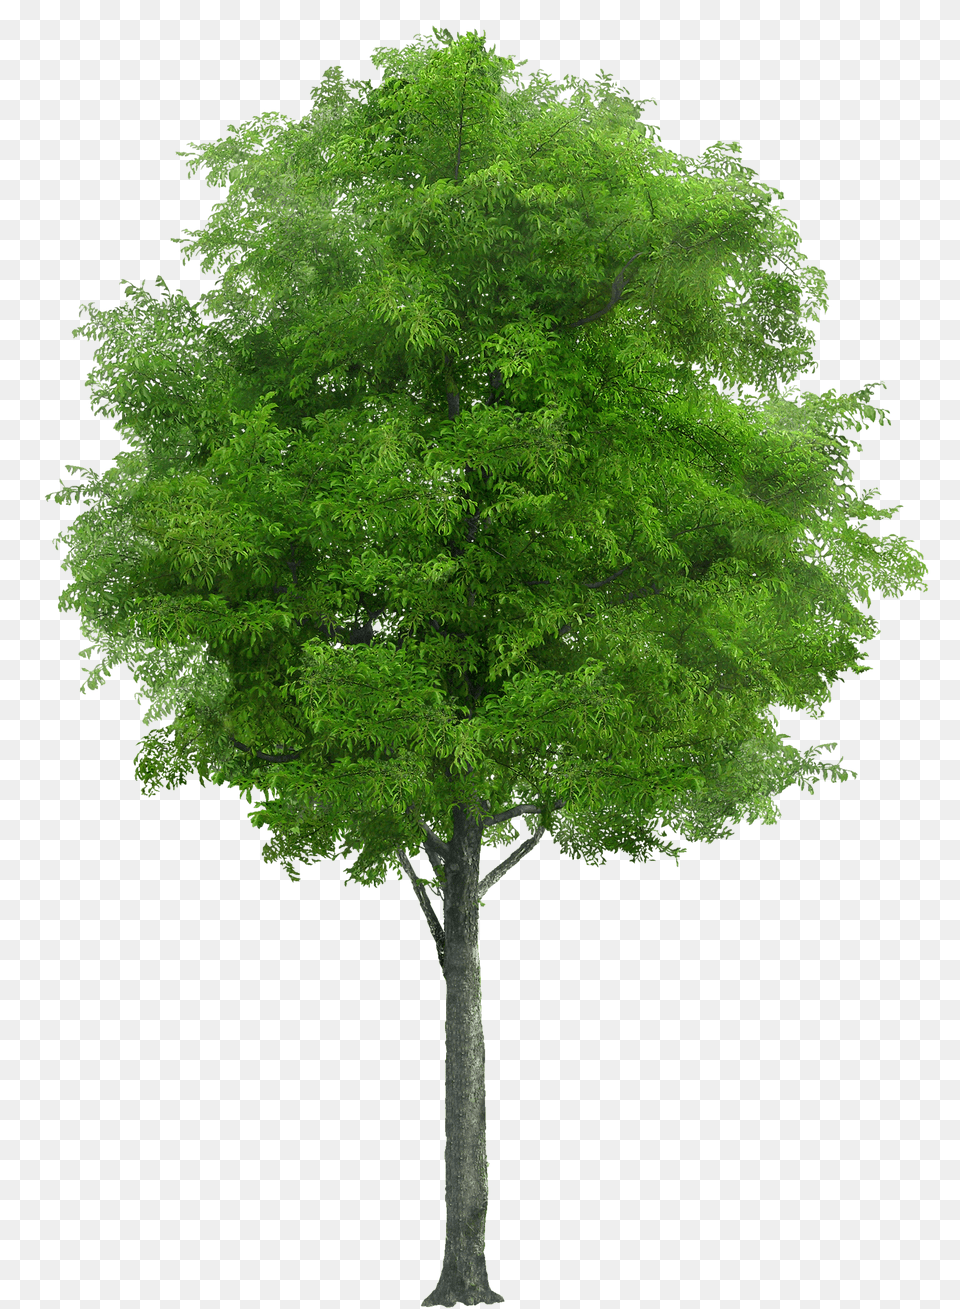 Treenatureforesttrunkvegetation Free Image From Trees For Photoshop, Oak, Plant, Sycamore, Tree Png